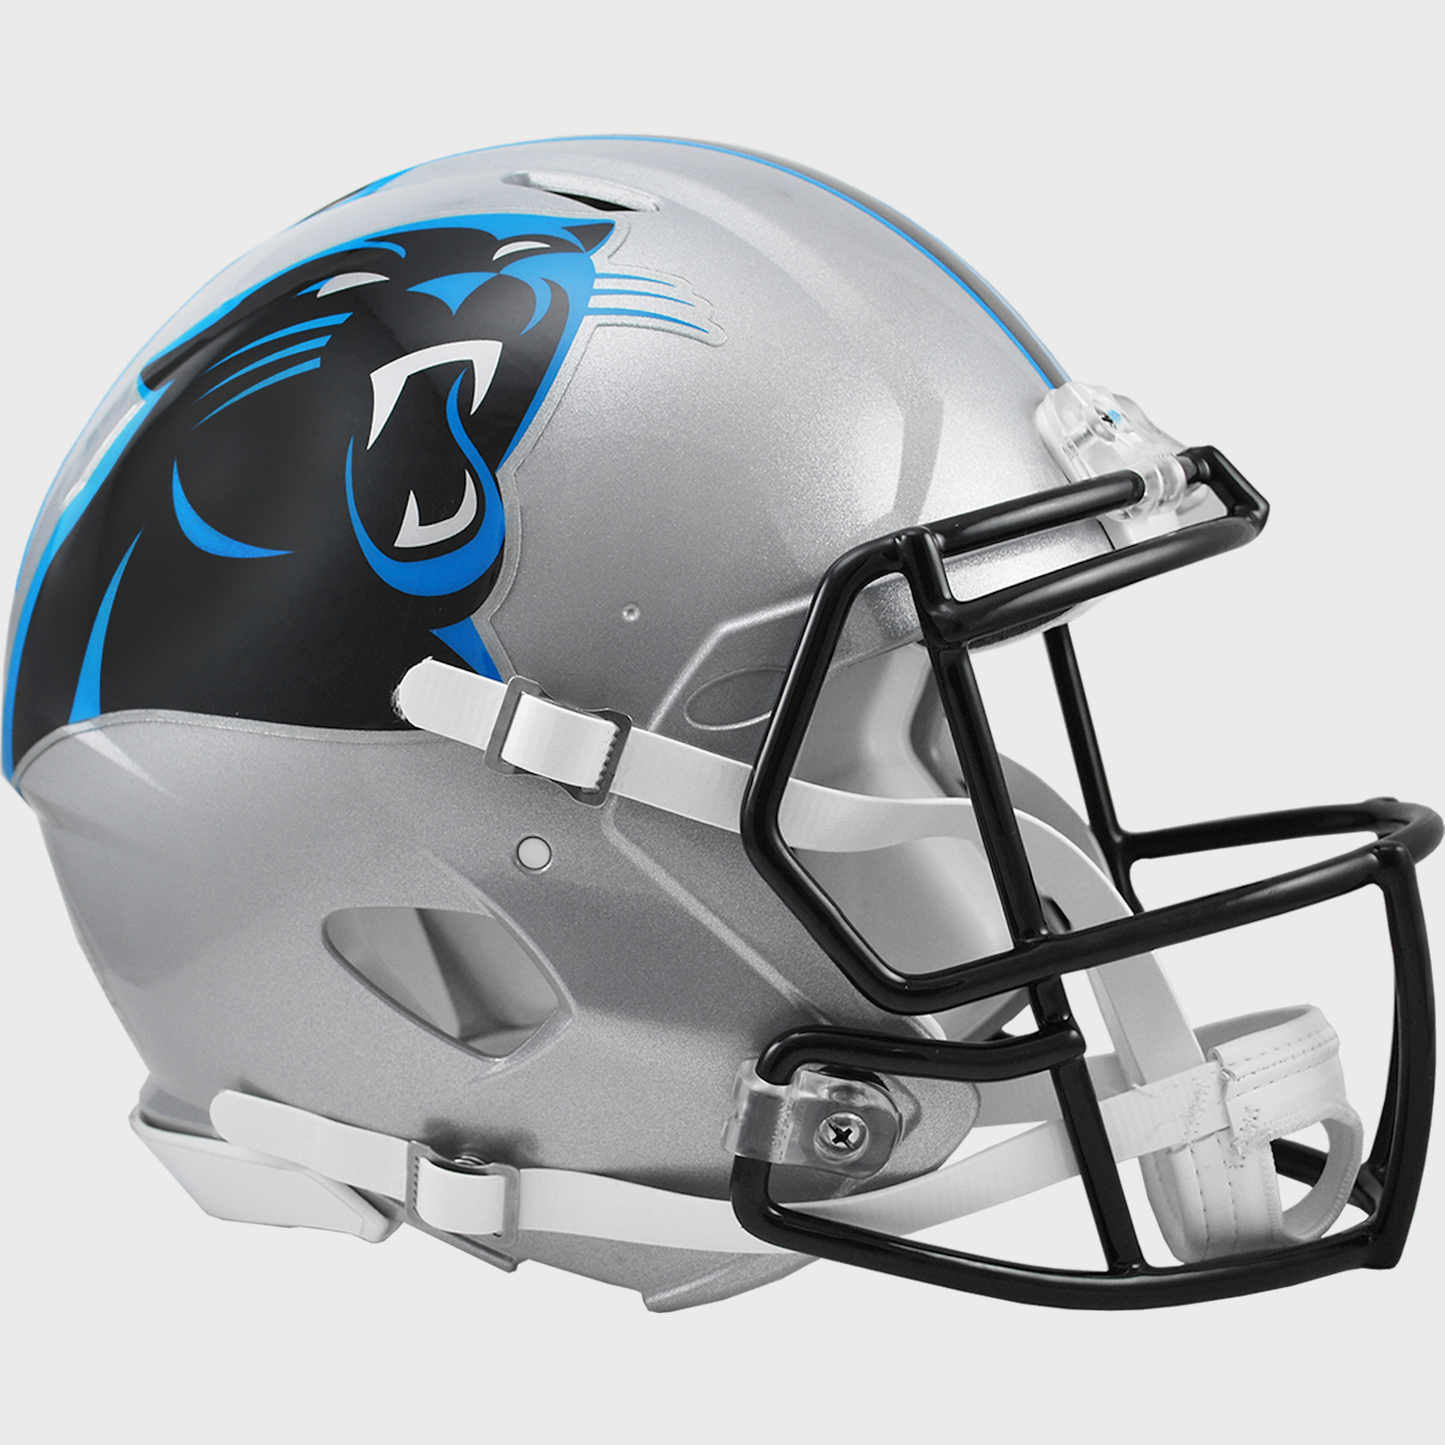 Carolina Panthers authentic full size helmet